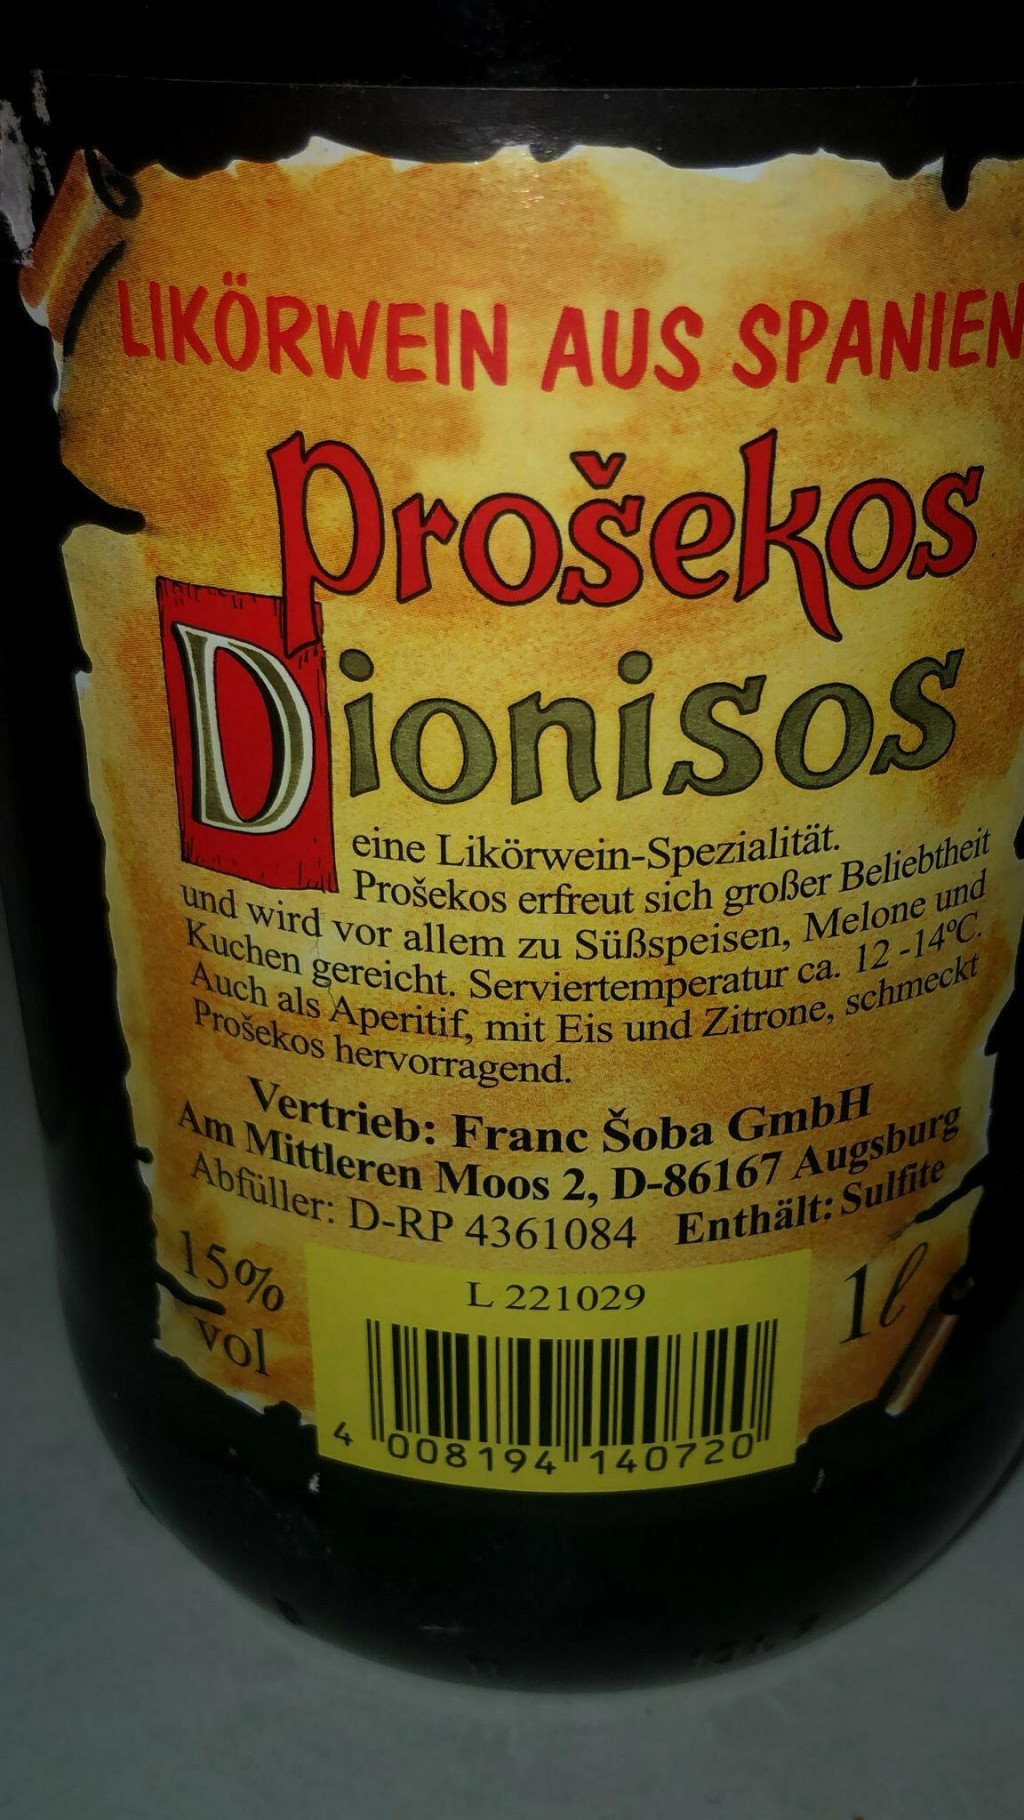 &lt;p&gt;Hvar, 260923.&lt;br&gt;
Etiketa ‘Prosekosa Dionisos‘ neodoljivo podsjeca na etiketu nasega proseka ‘Dioklecijan‘,&lt;br&gt;
Na slici je etiketa ‘Prosekosa Dionisos‘ kojeg se distribuira u Njemackoj,&lt;br&gt;